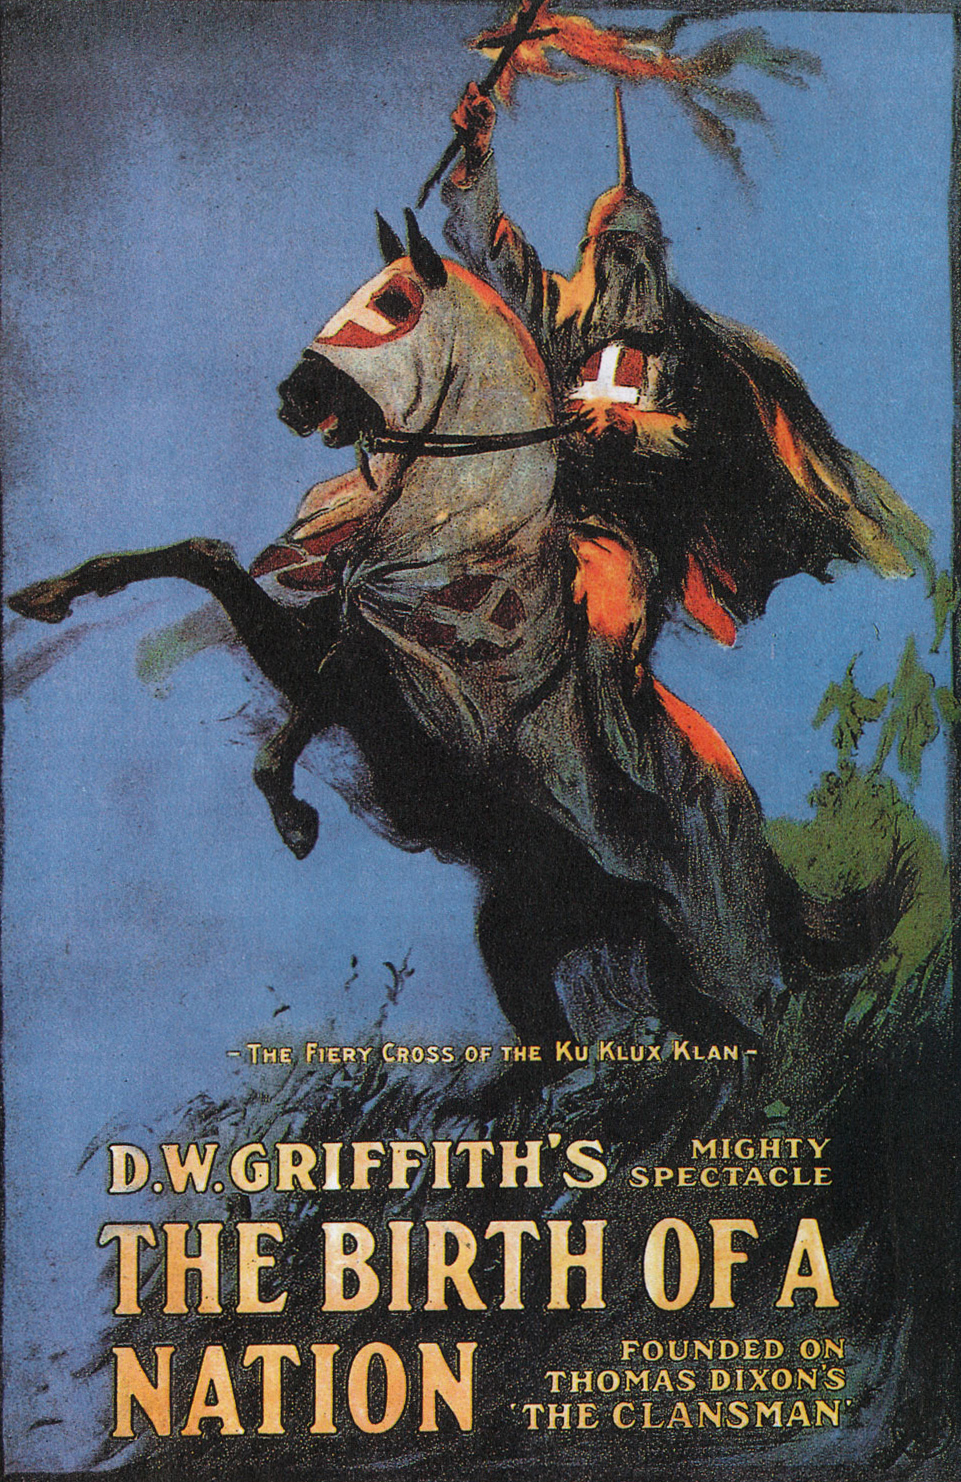 The Birth of a Nation (1915). Producida por D. W. Griffith y Harry Aitken